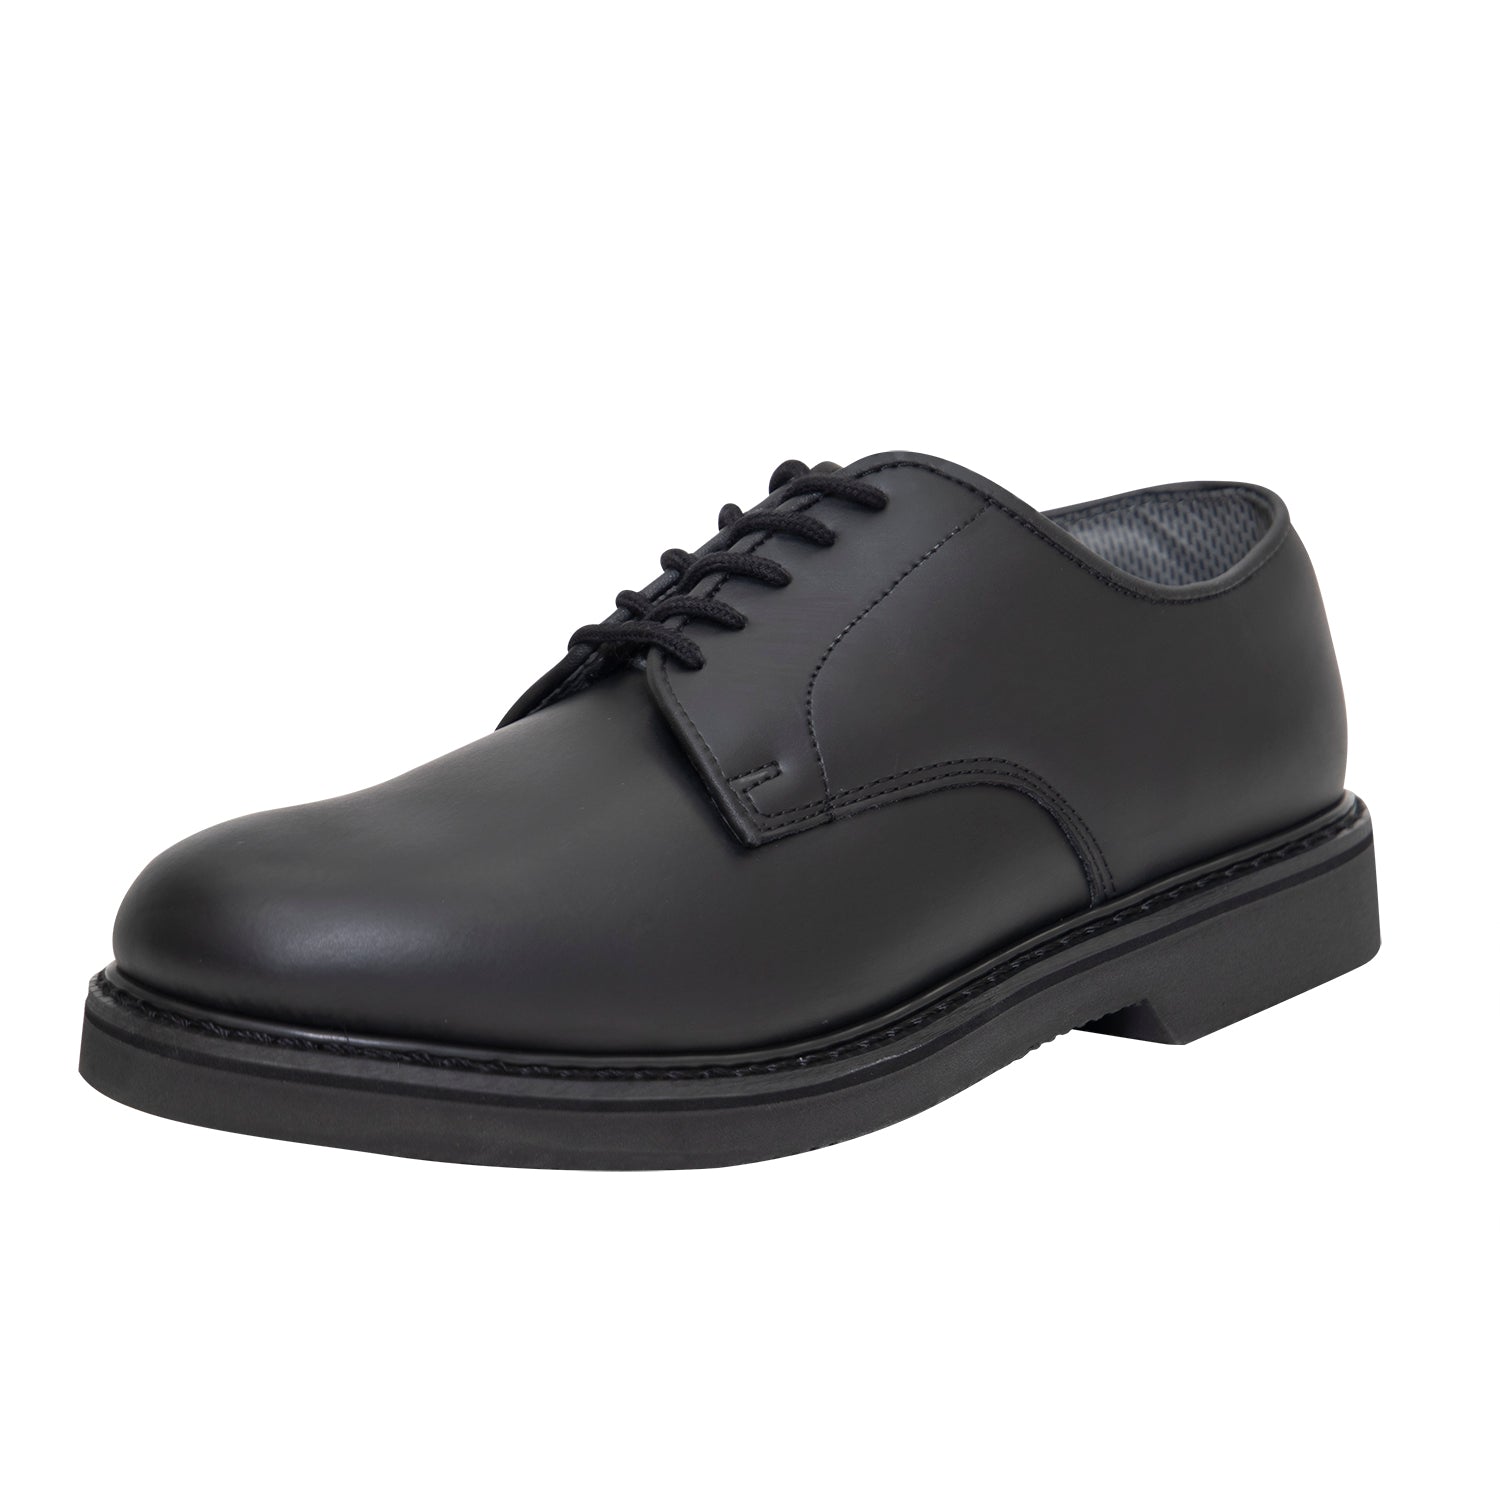 Military Uniform Oxford Leather Dress Shoes Black